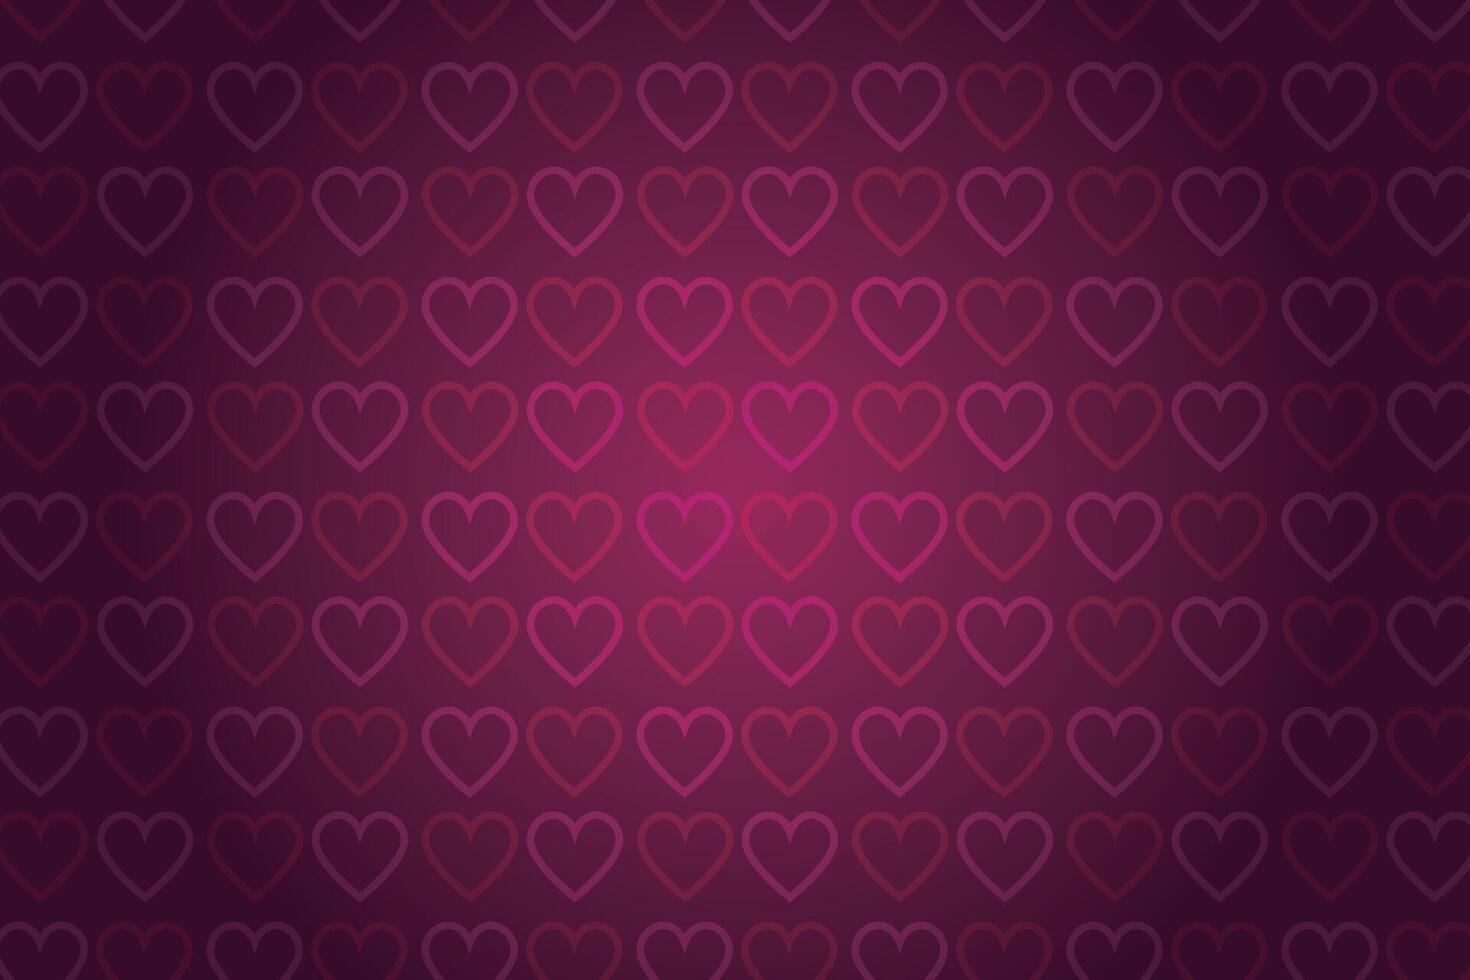 Vector love heart pattern, vector hand drawn Valentine's Day pattern